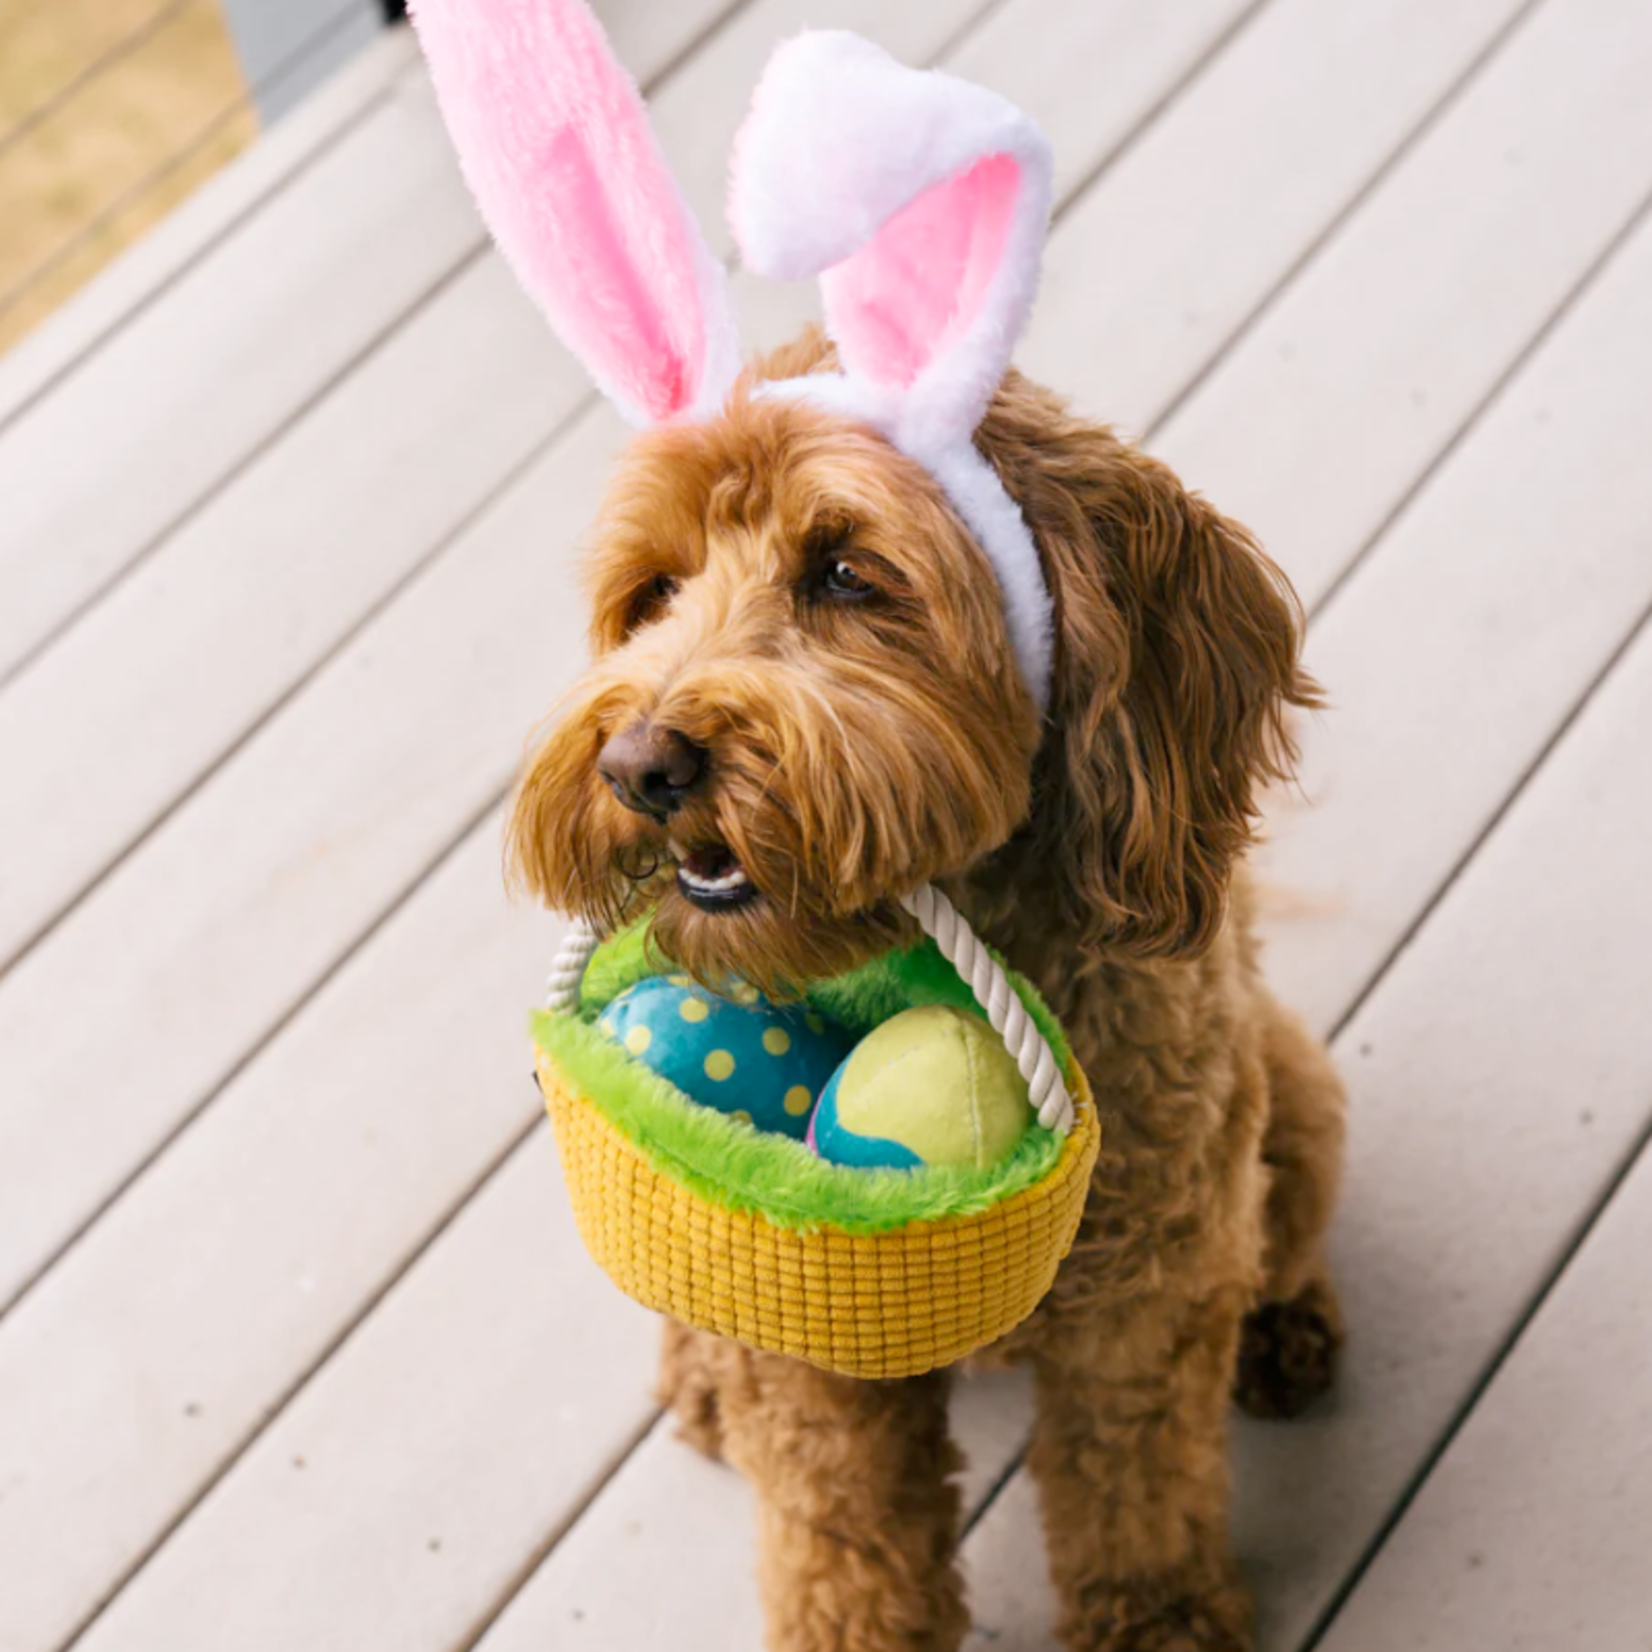 P.L.A.Y. Eggs-cellent Easter Egg Basket - Hippity Hoppity Collection Dog Toy - P.L.A.Y.